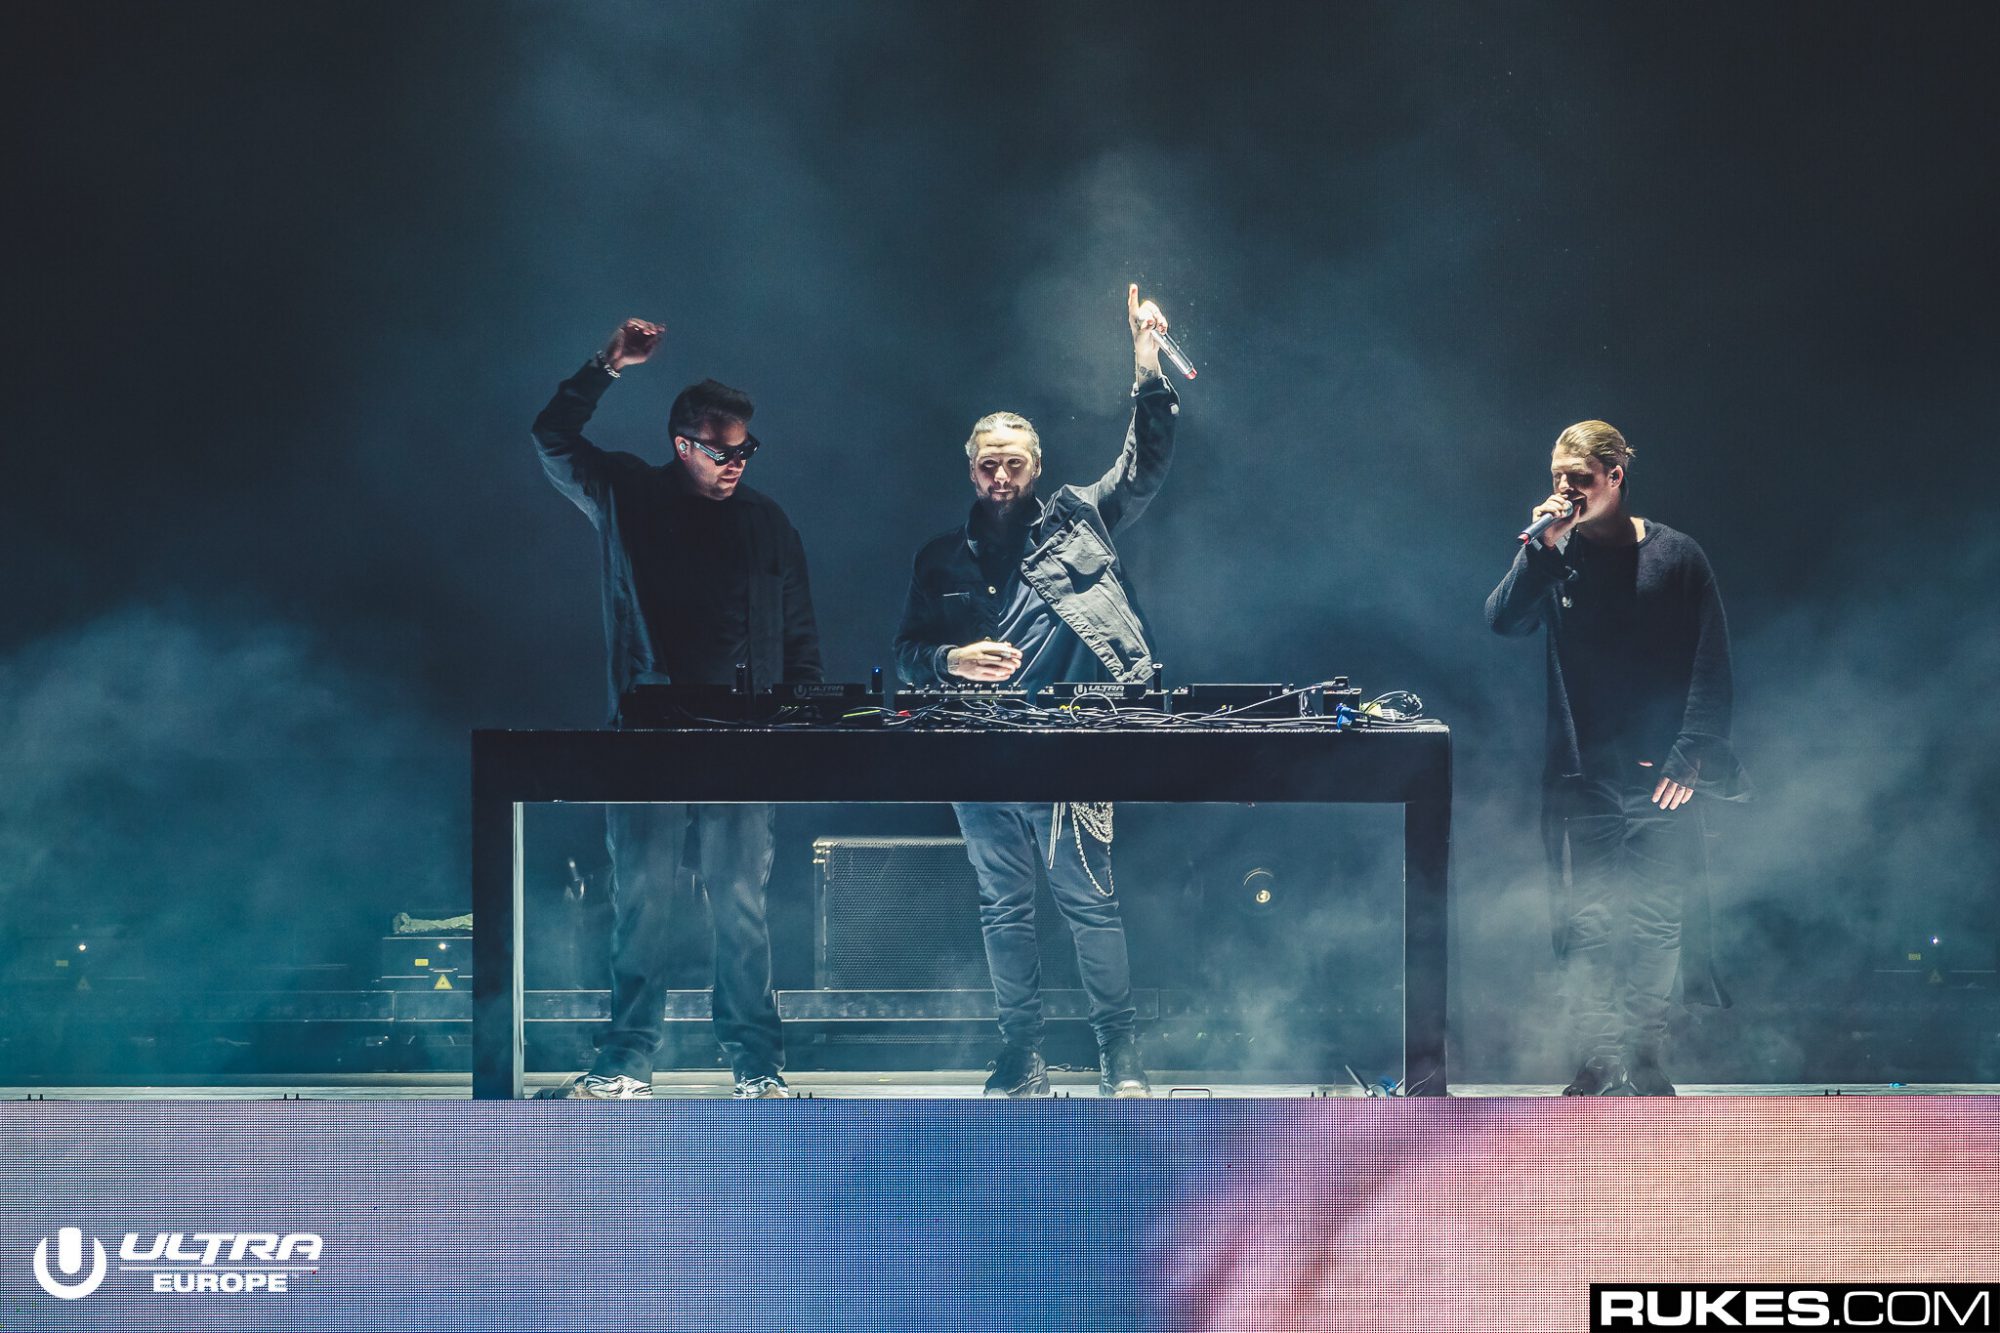 Swedish House Mafia at Ultra Europe 2019